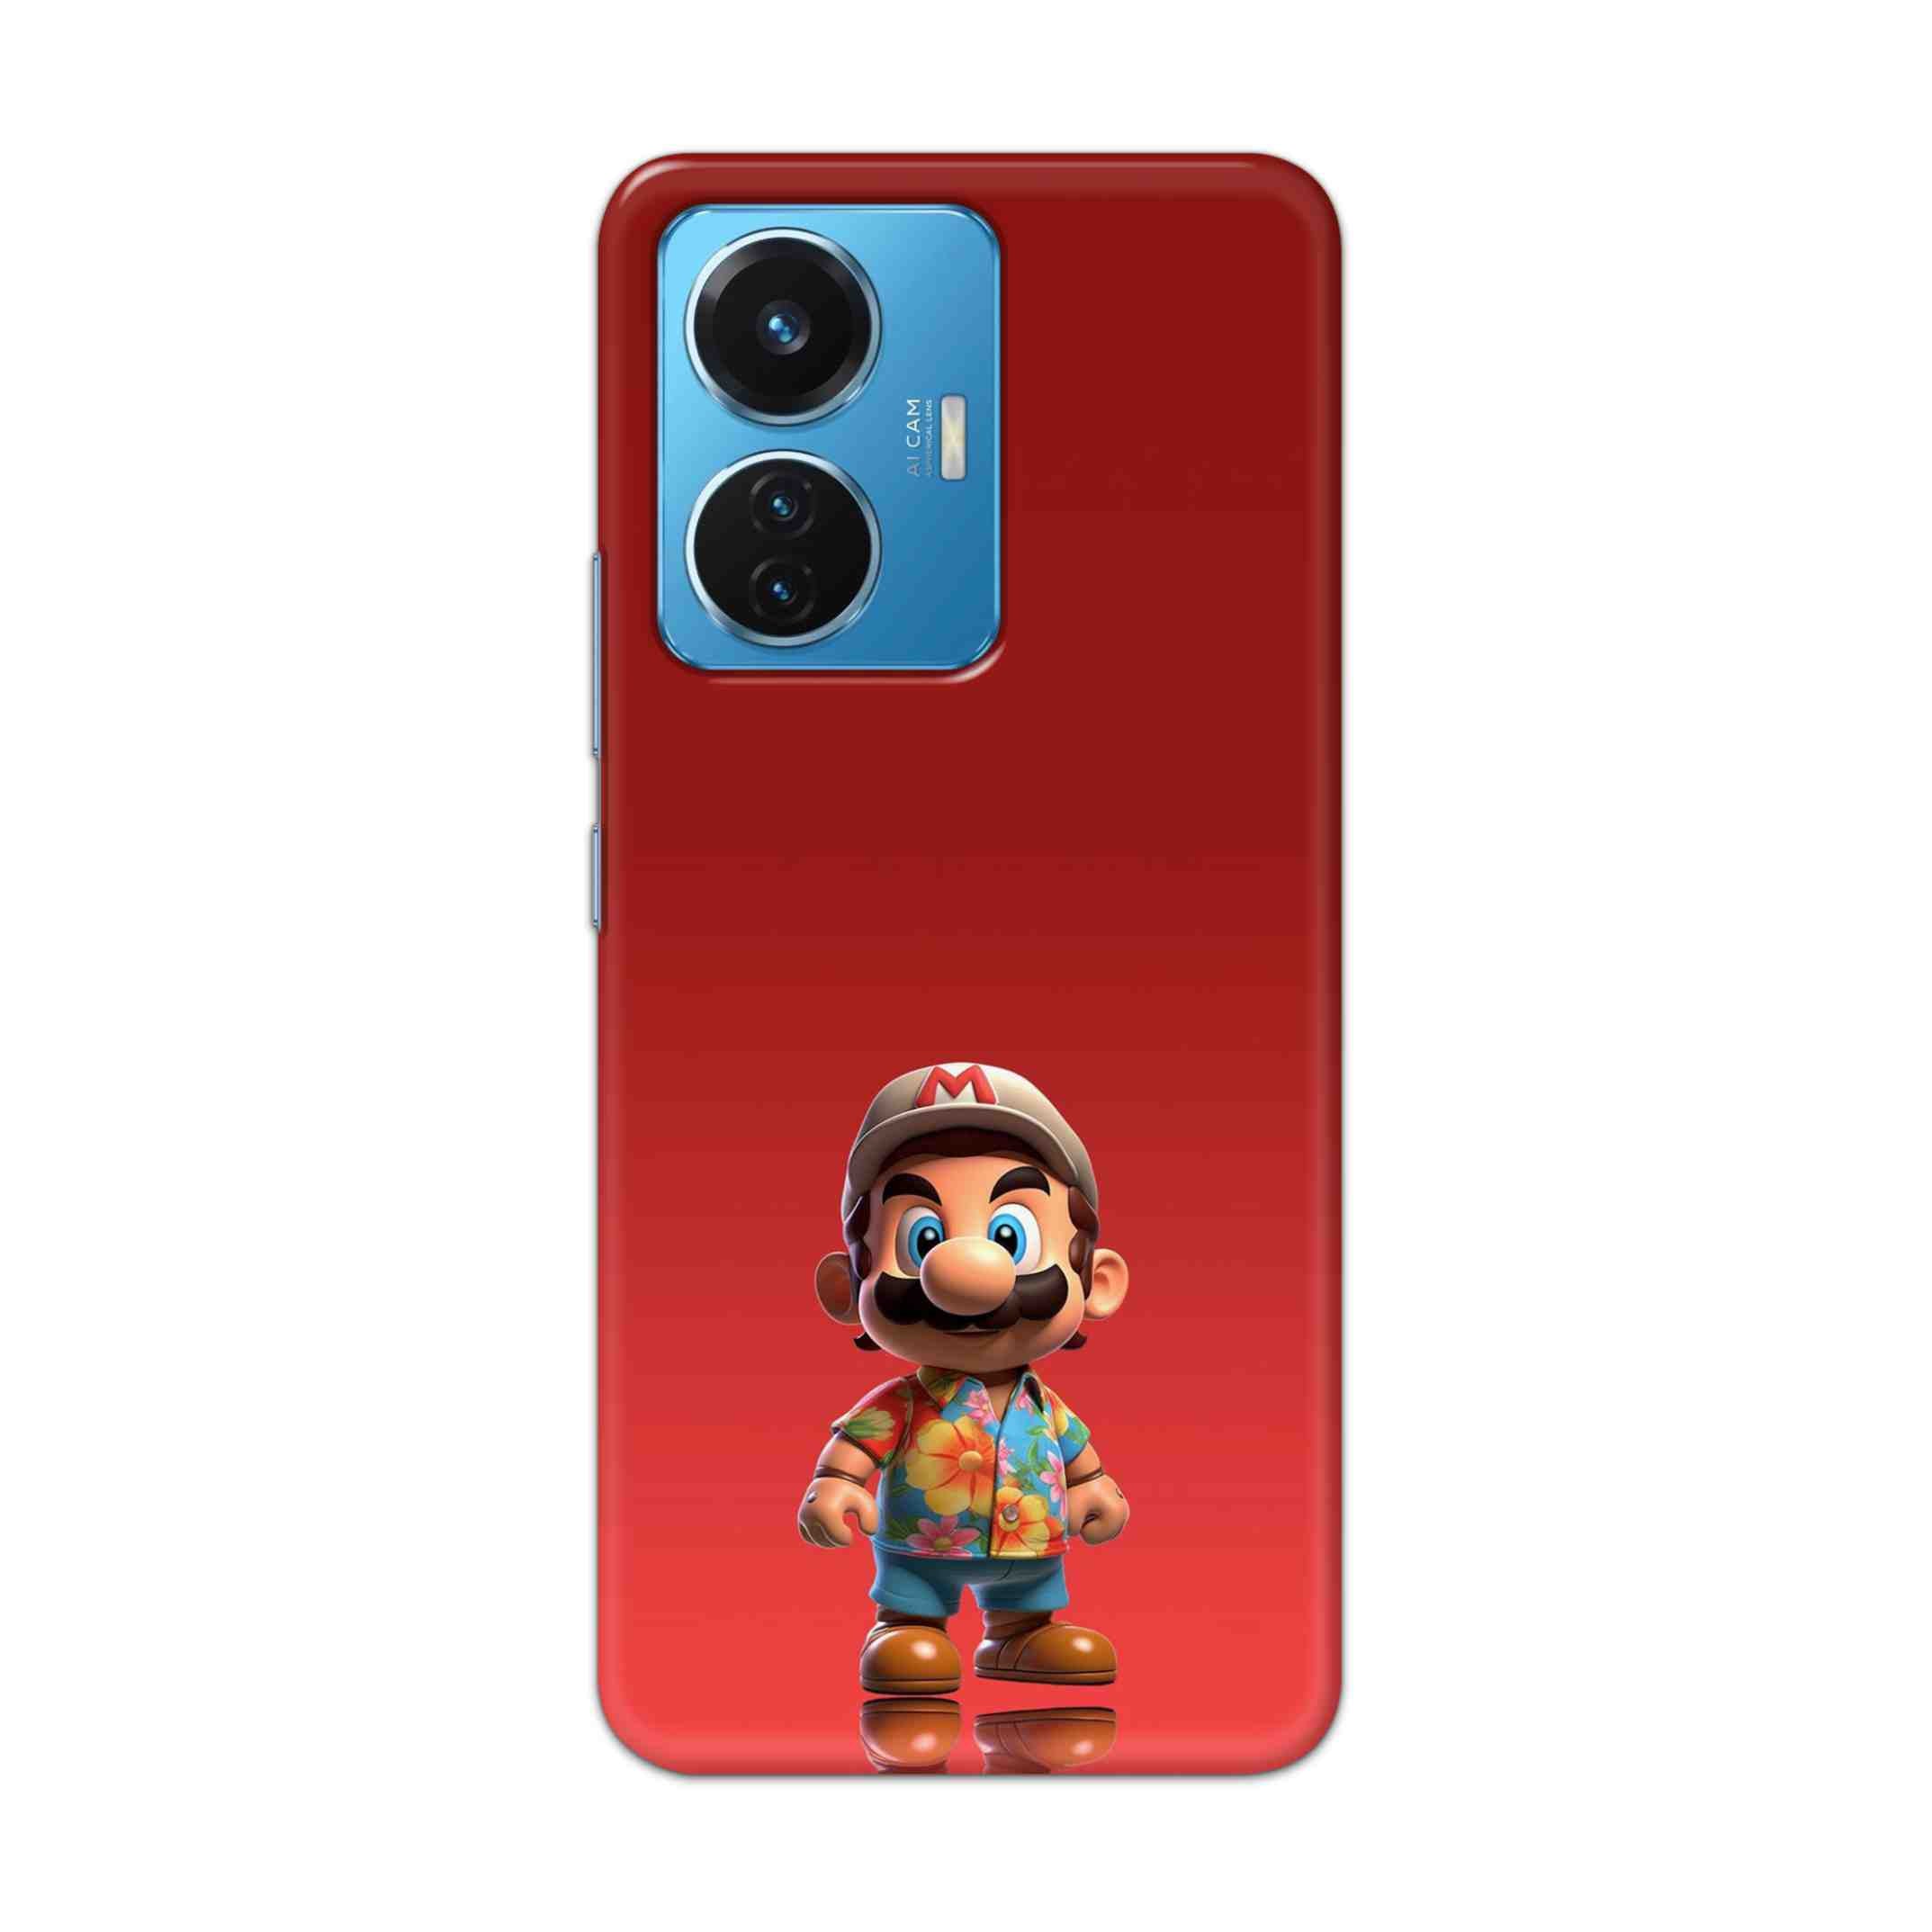 Buy Mario Hard Back Mobile Phone Case Cover For Vivo T1 44W Online